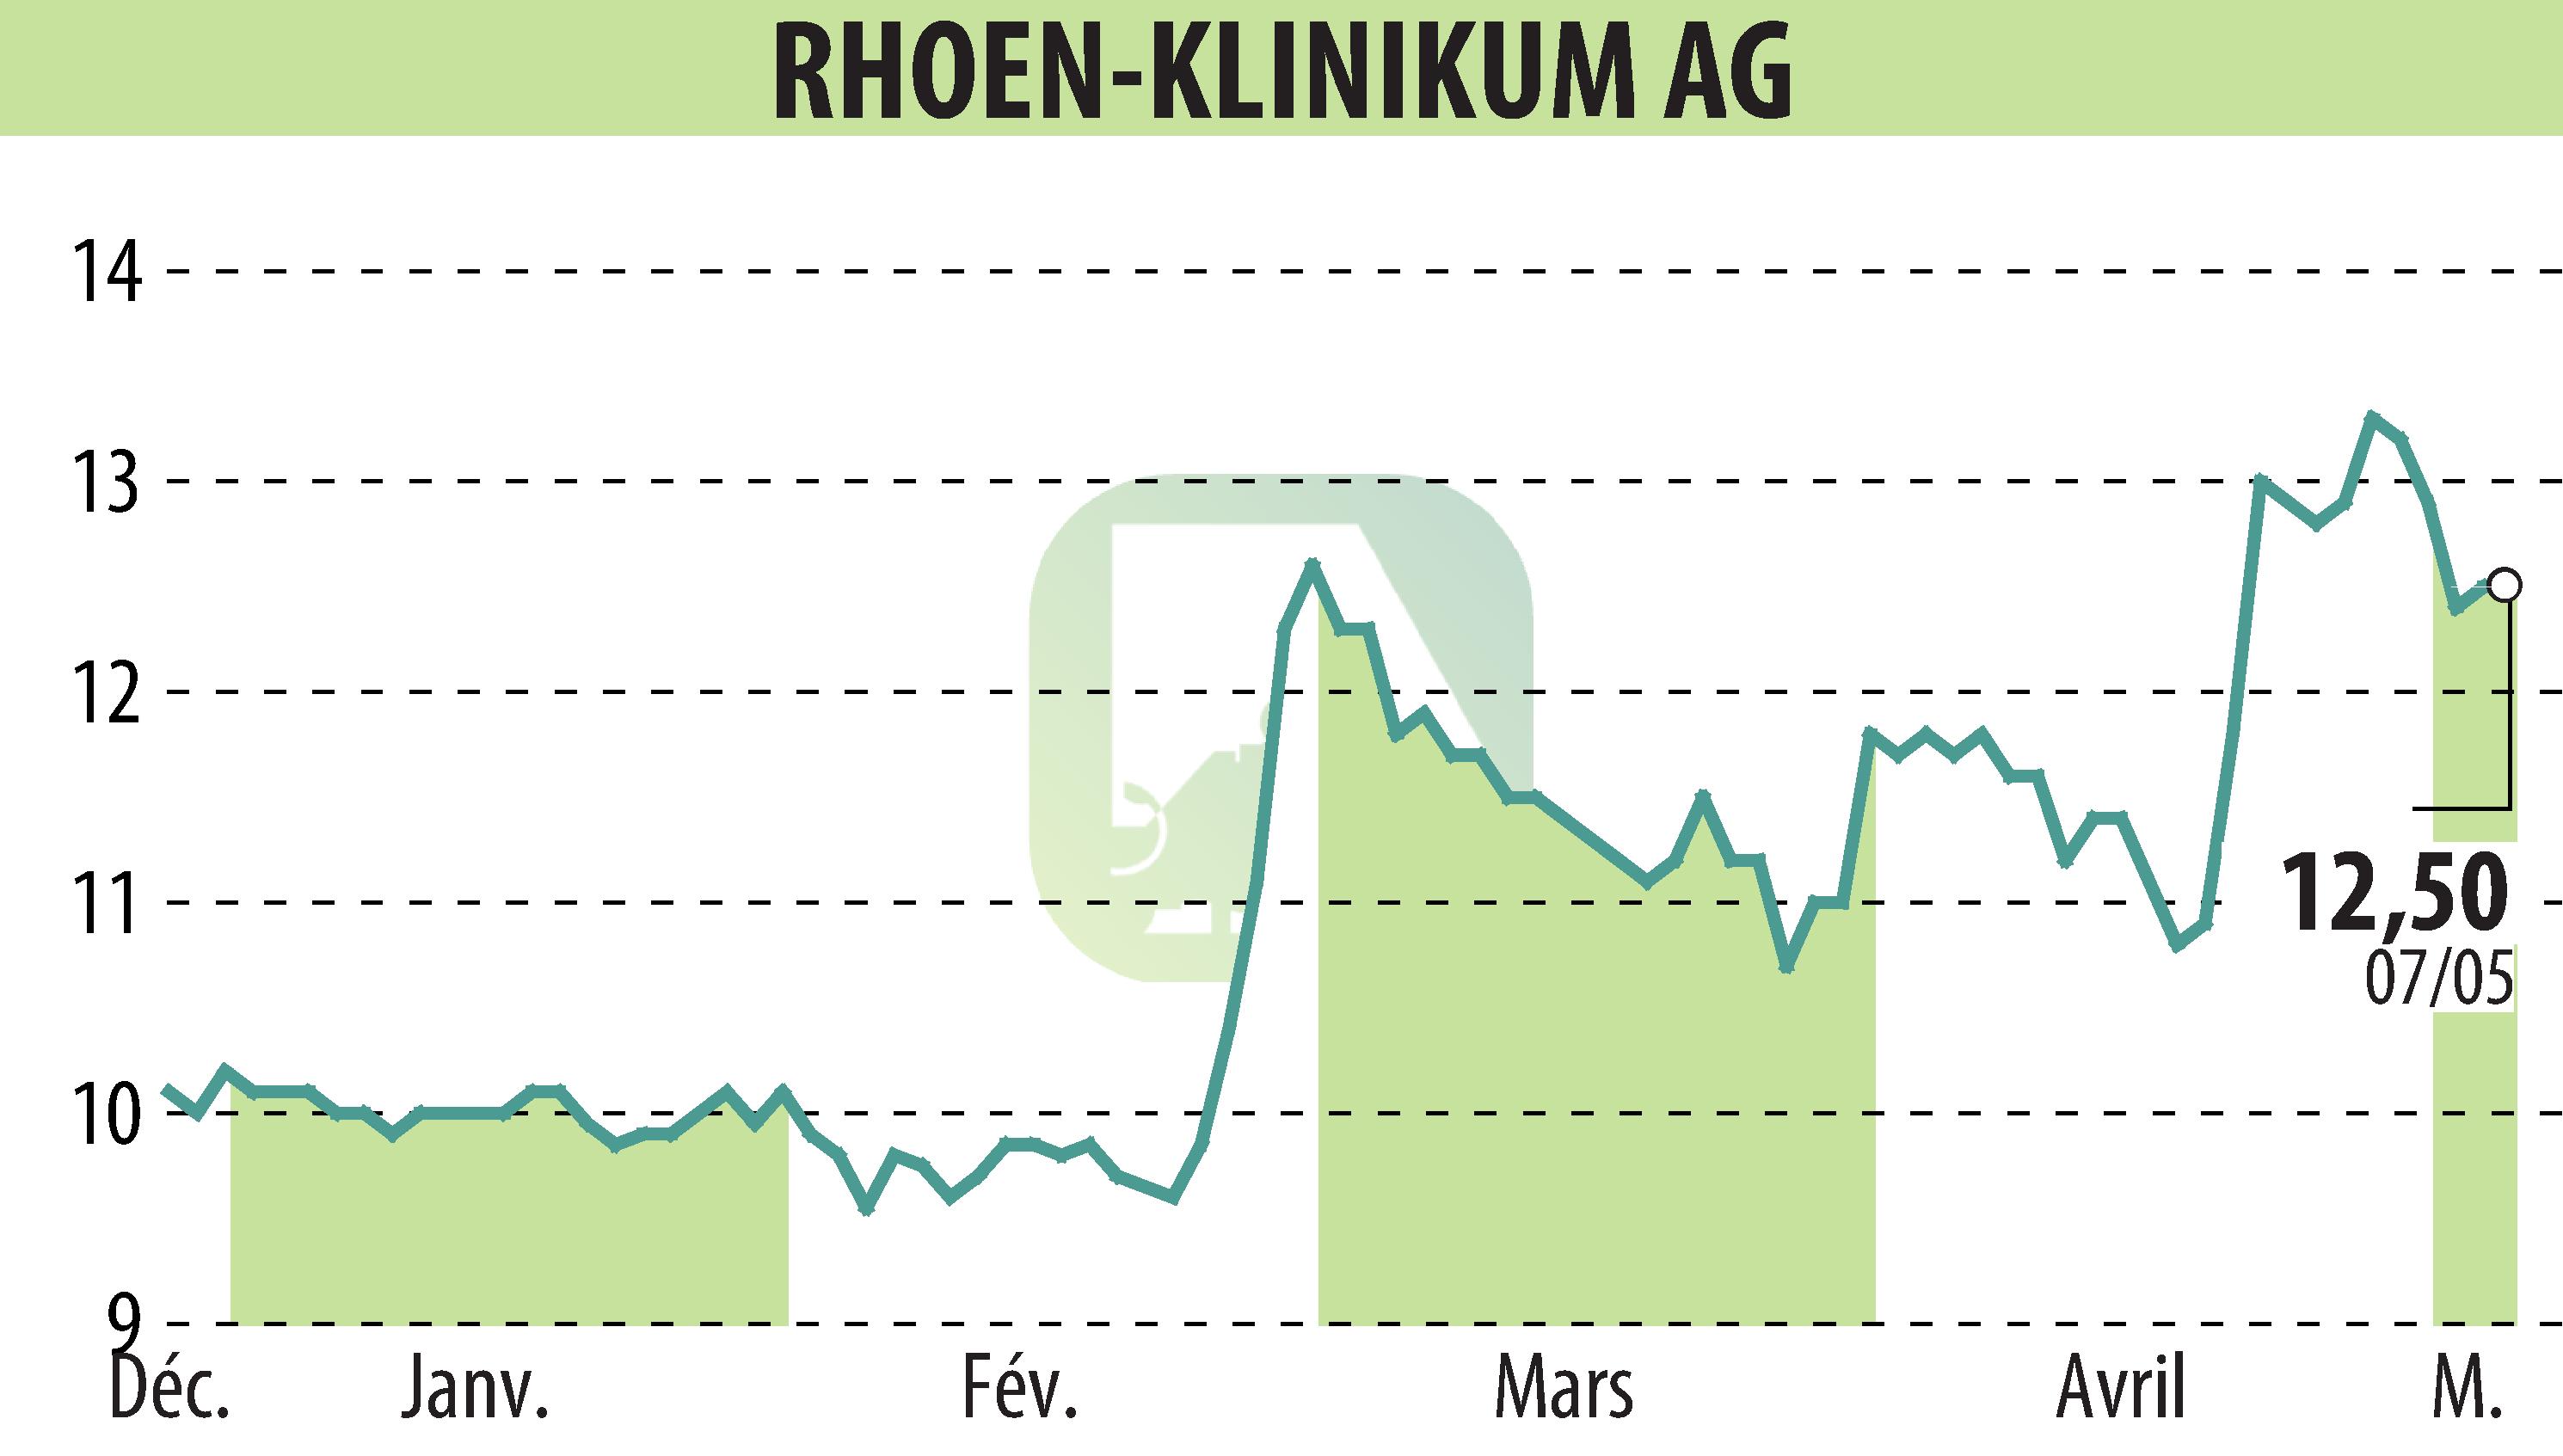 Stock price chart of RHÖN-KLINIKUM AG (EBR:RHK) showing fluctuations.